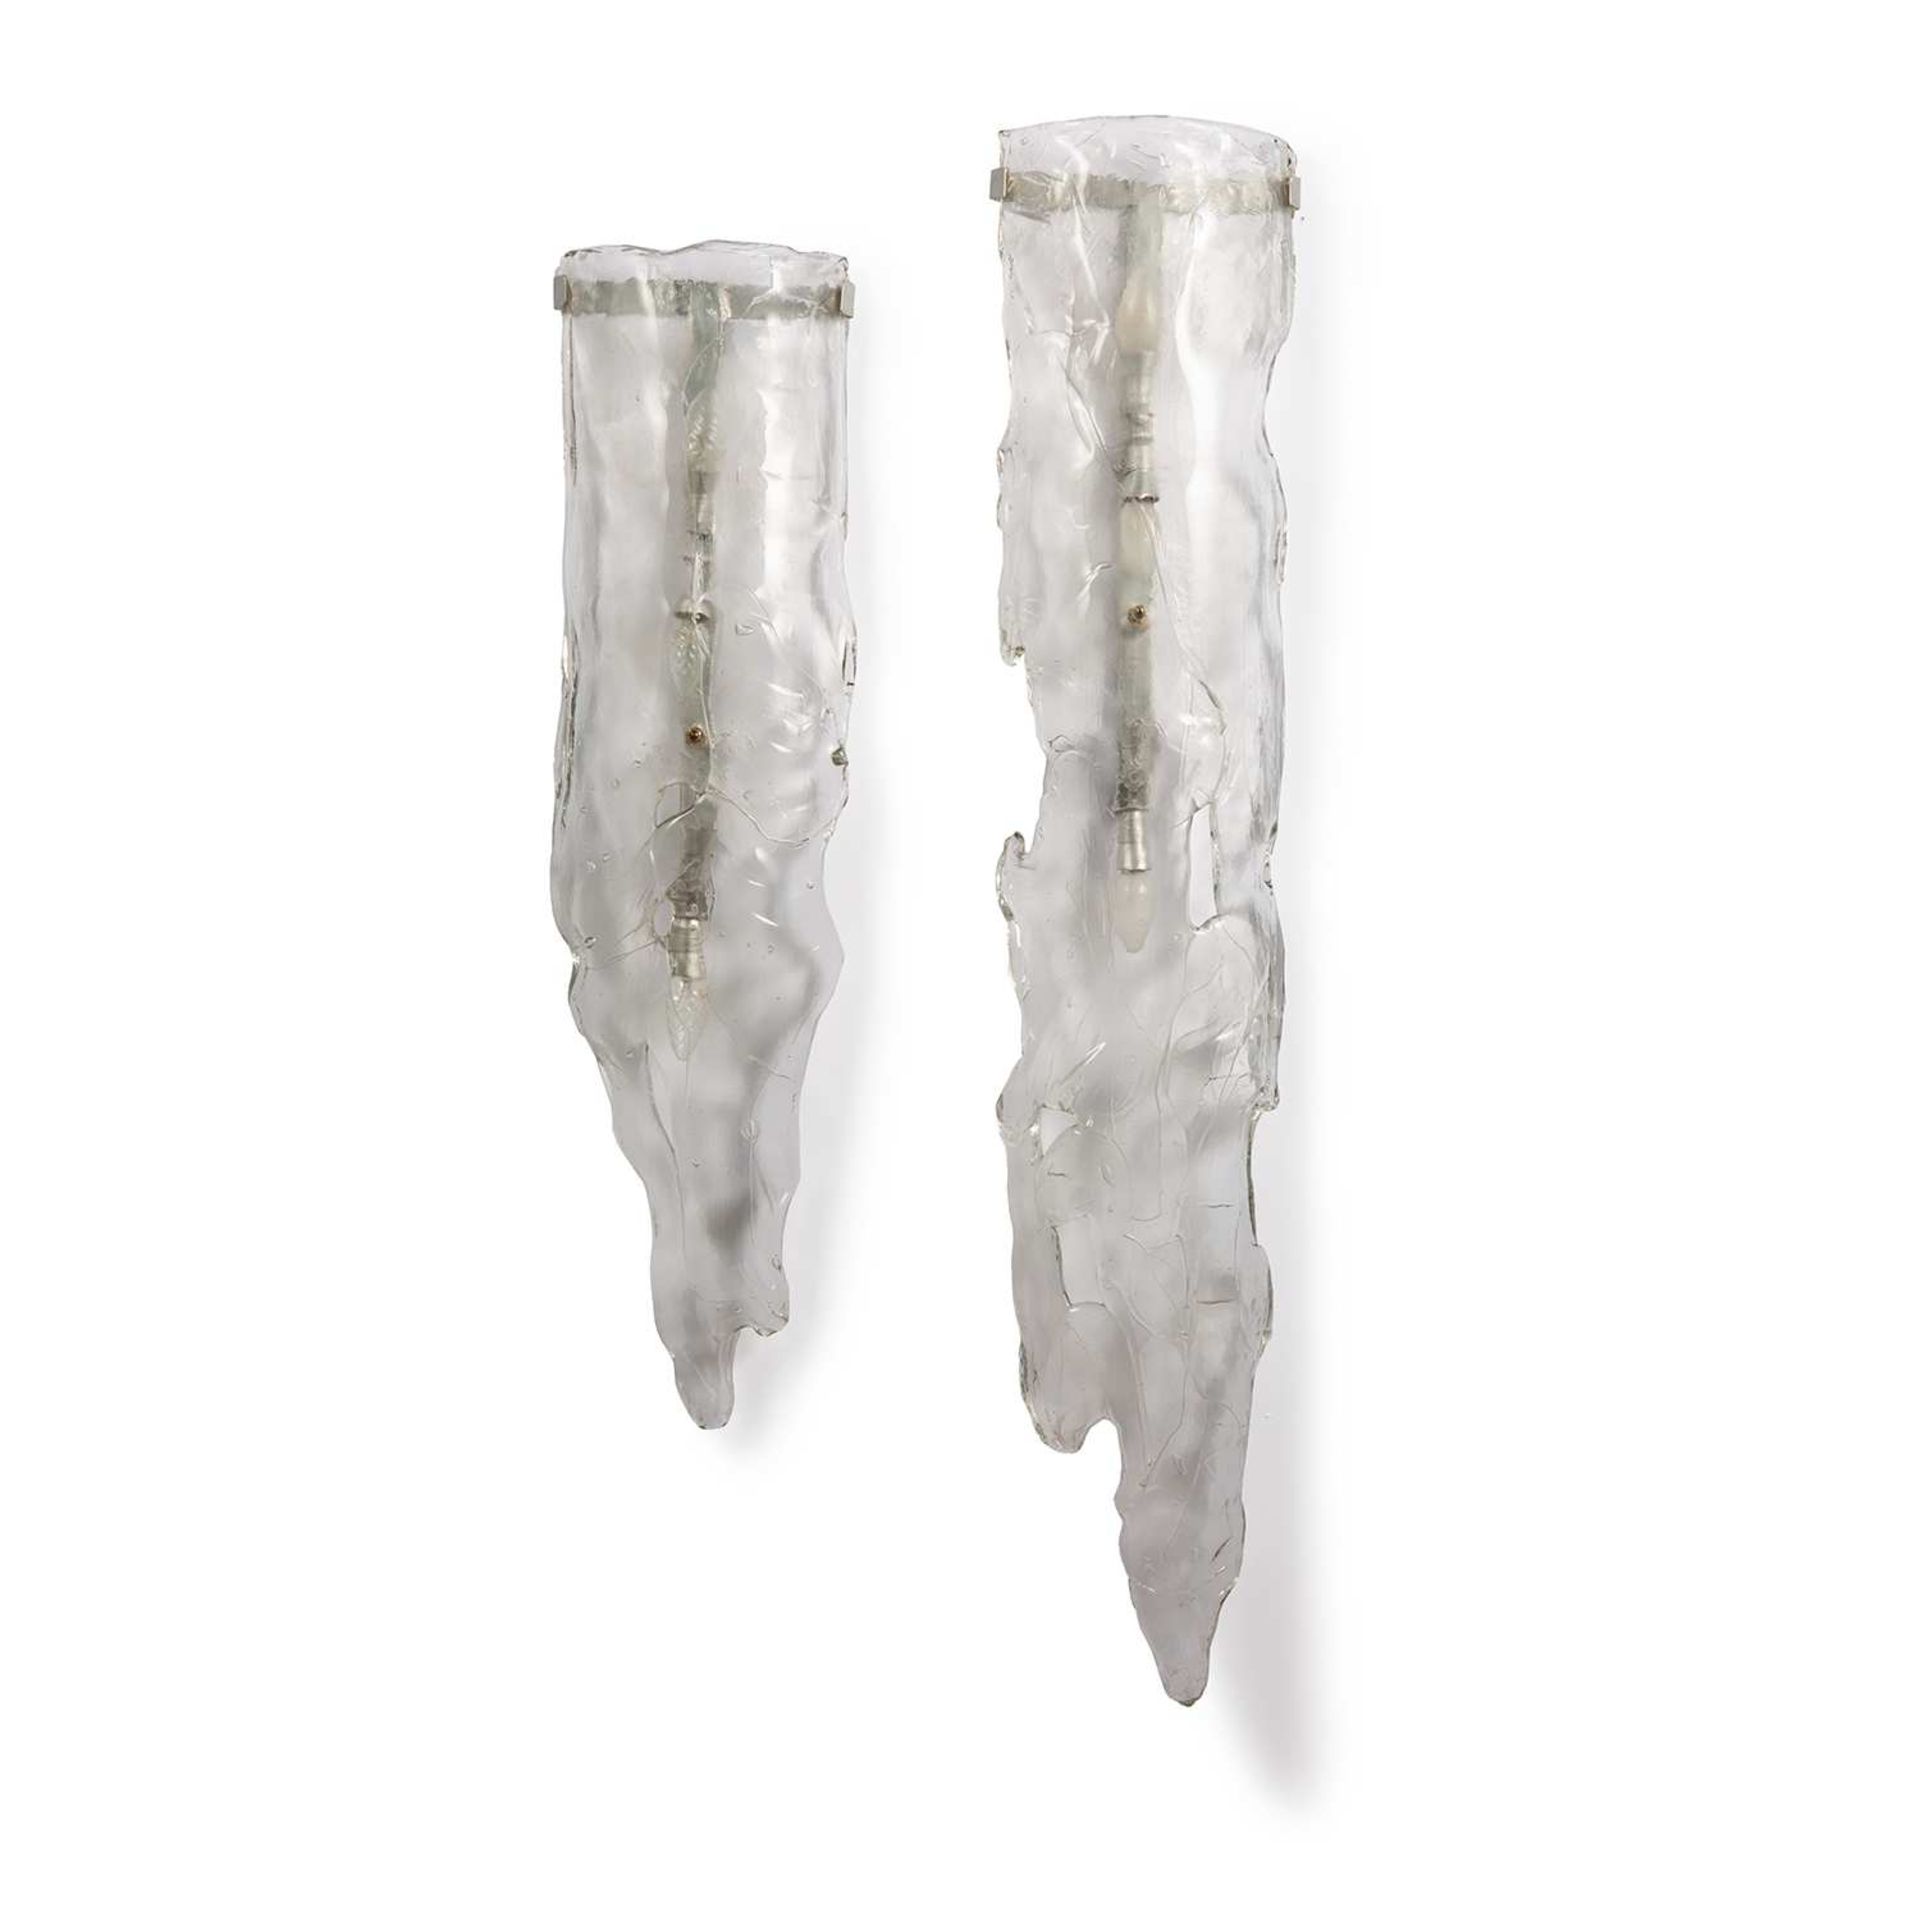 CARLO NASON (NÉ EN 1936) & MAZZEGA (ÉDITEUR) Paires d'appliques stalactites, circa 1960, en verre